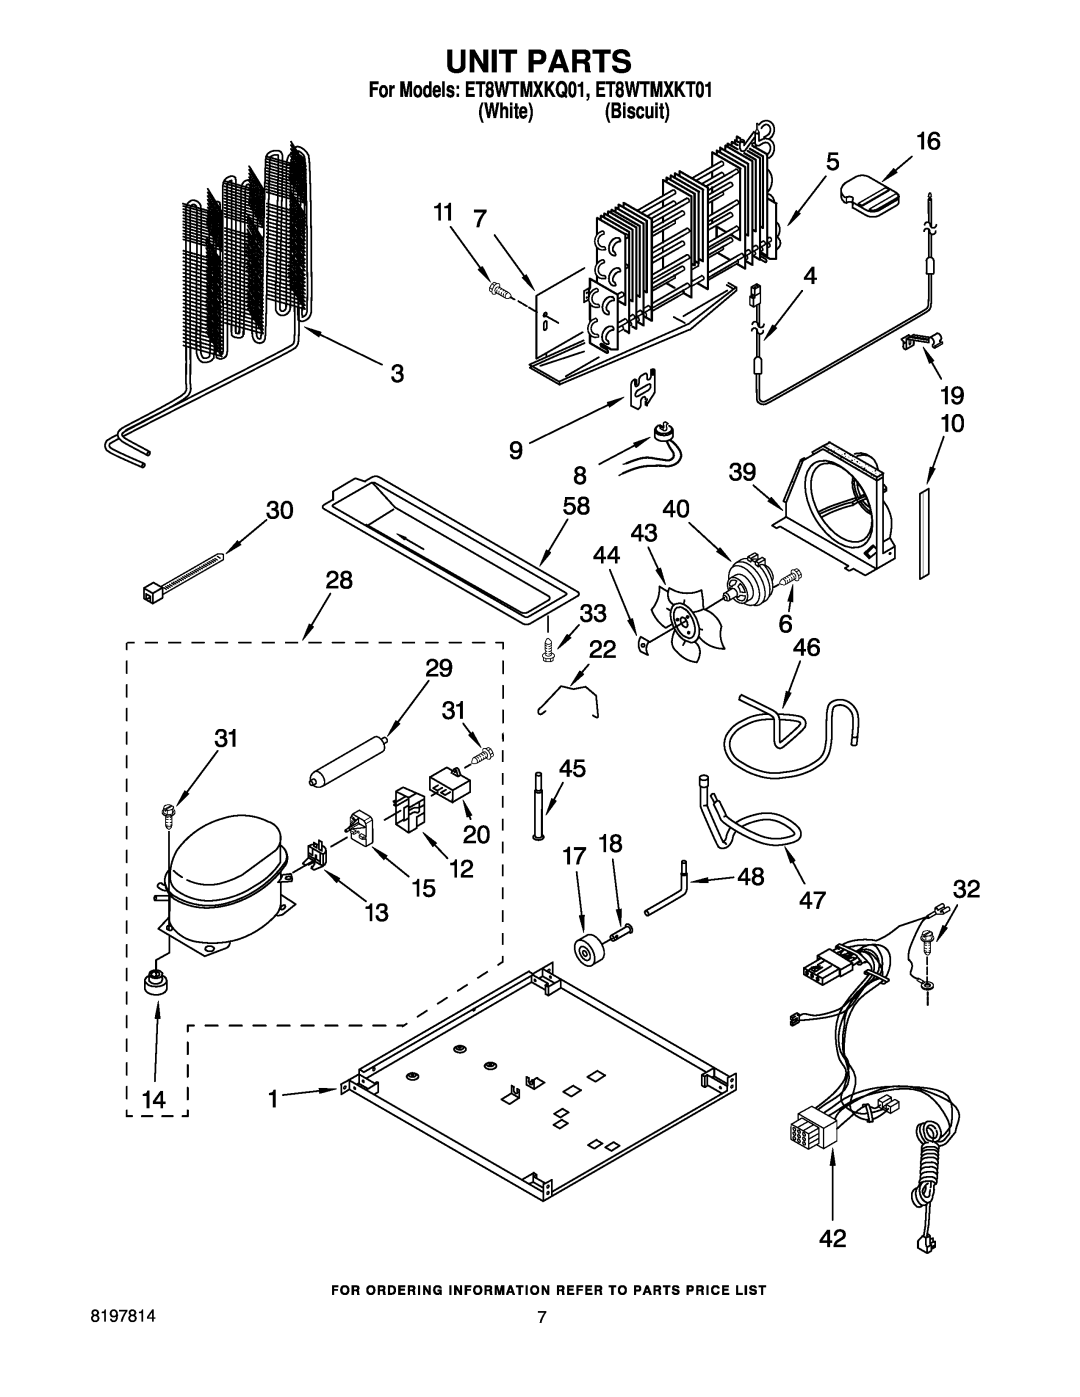 Whirlpool manual Unit Parts, For Models: ET8WTMXKQ01, ET8WTMXKT01, White Biscuit 